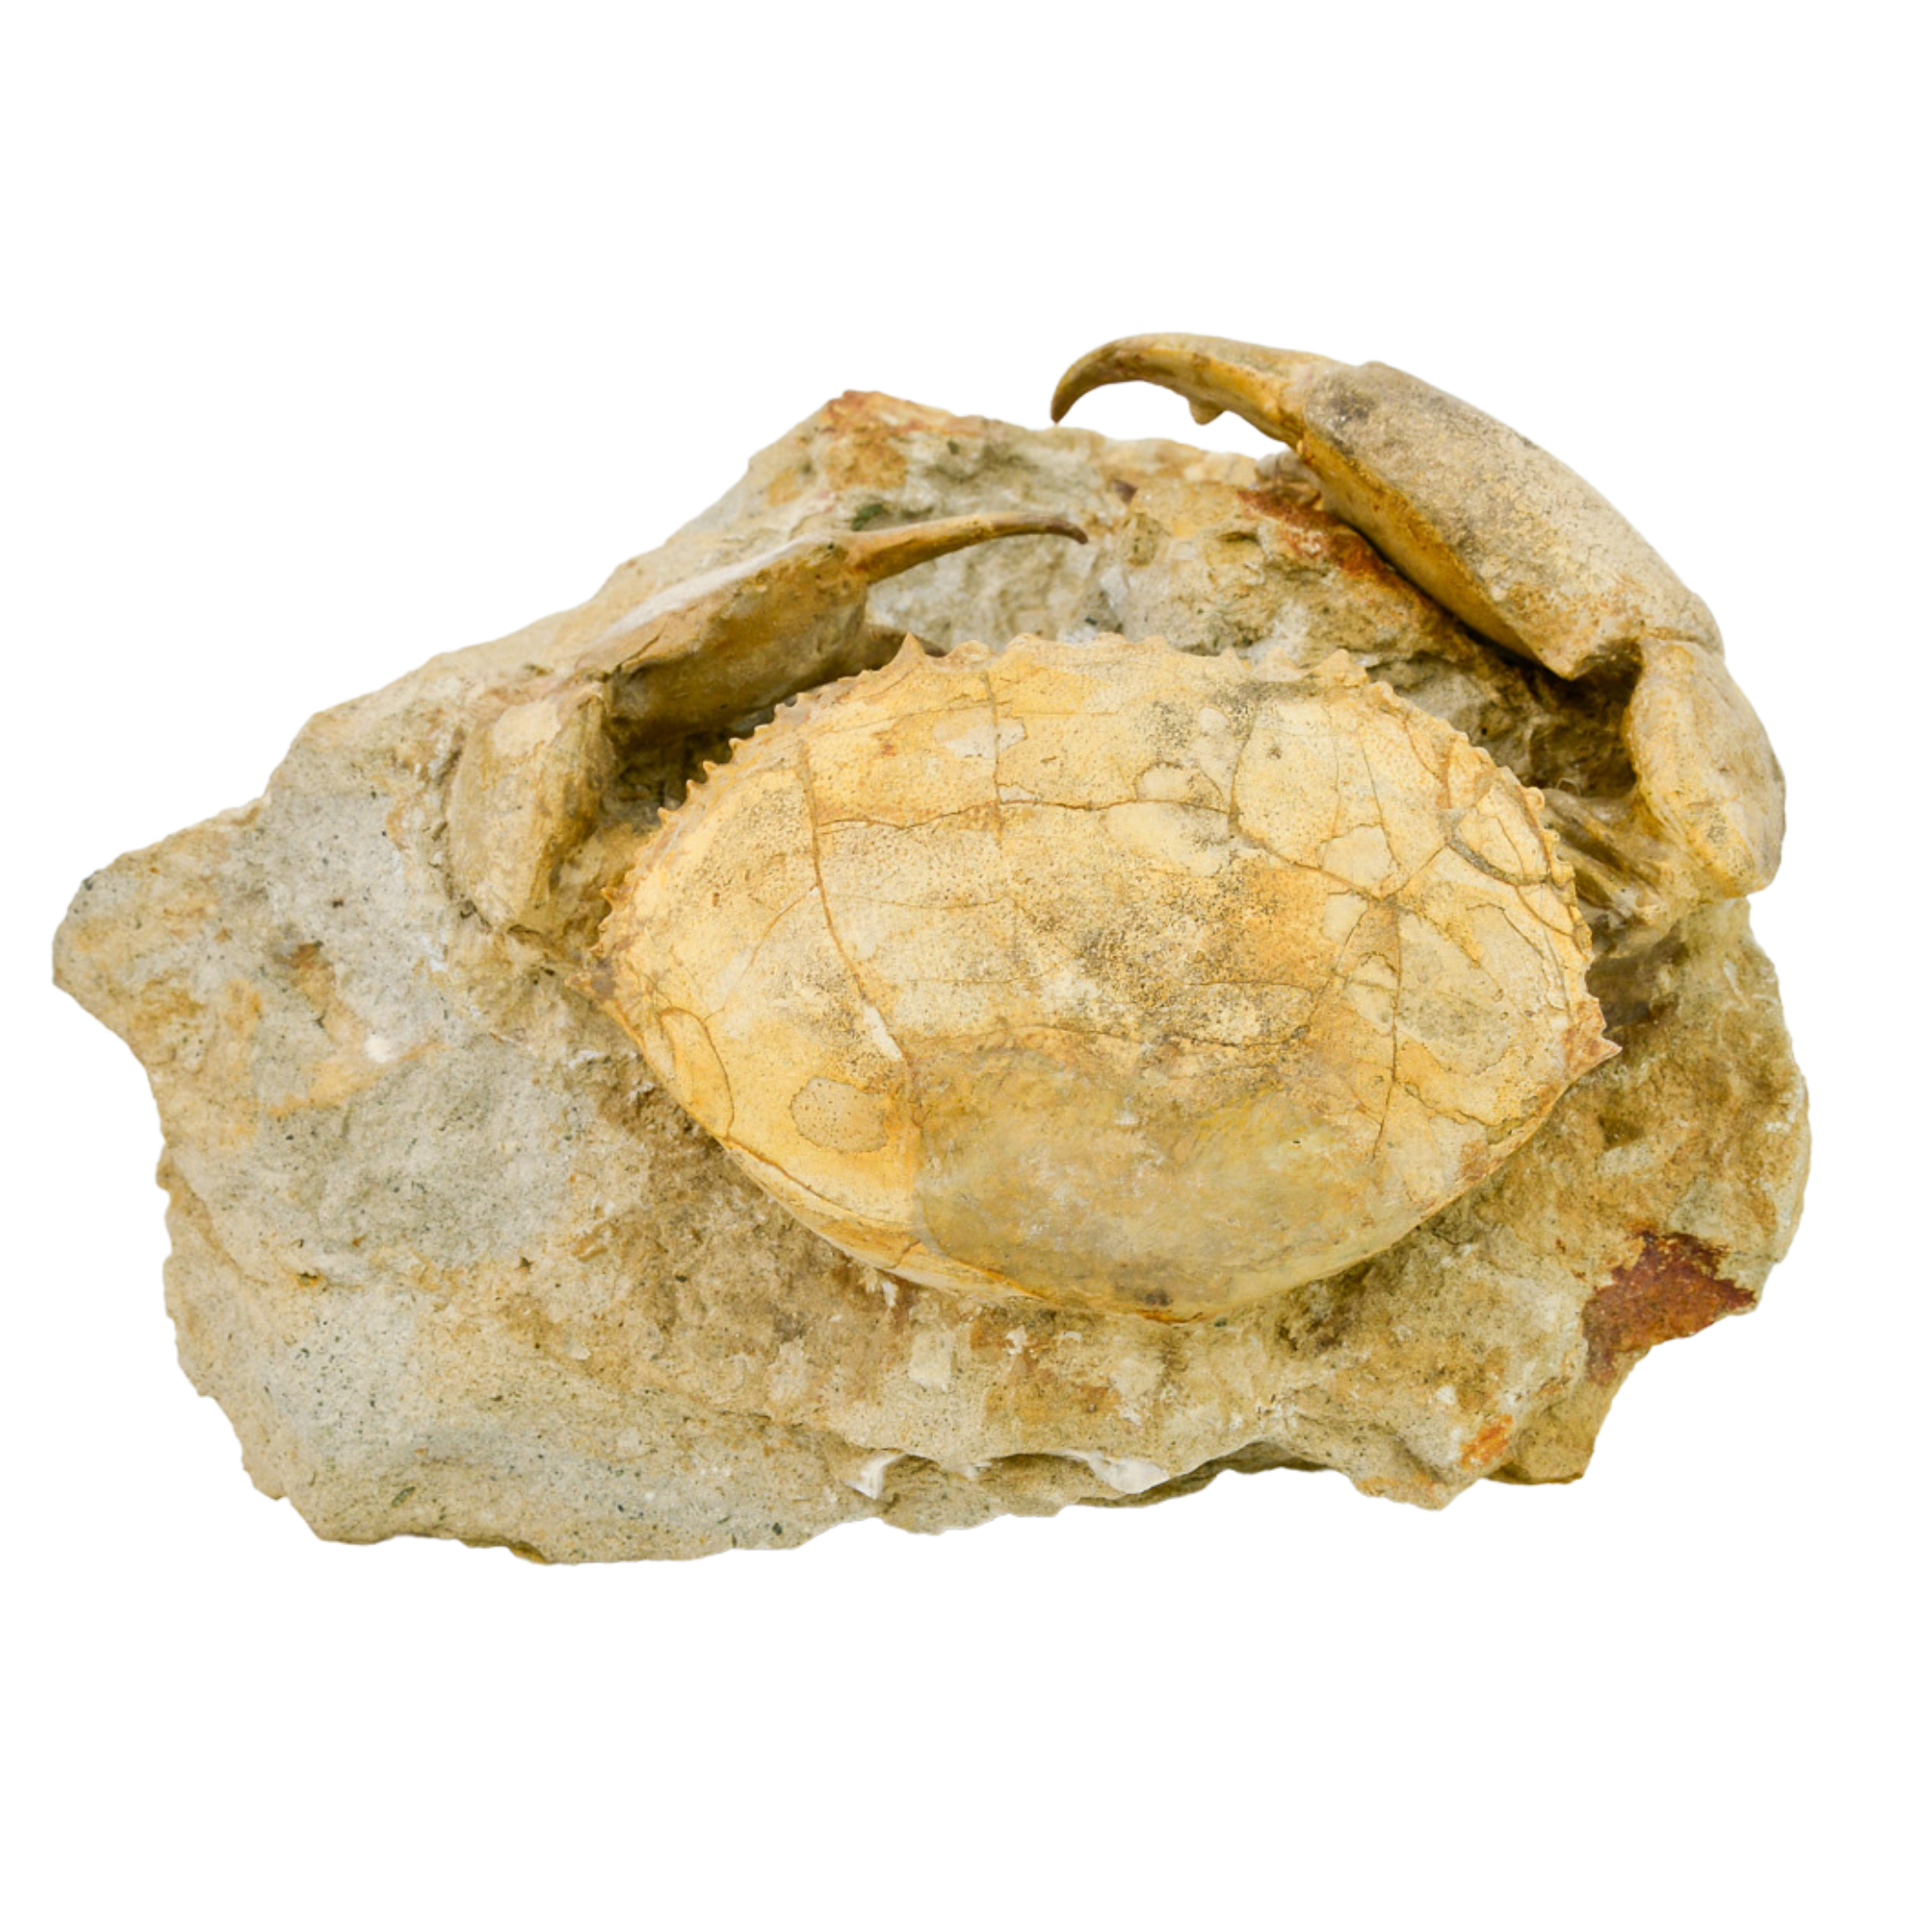 Crab Fossil